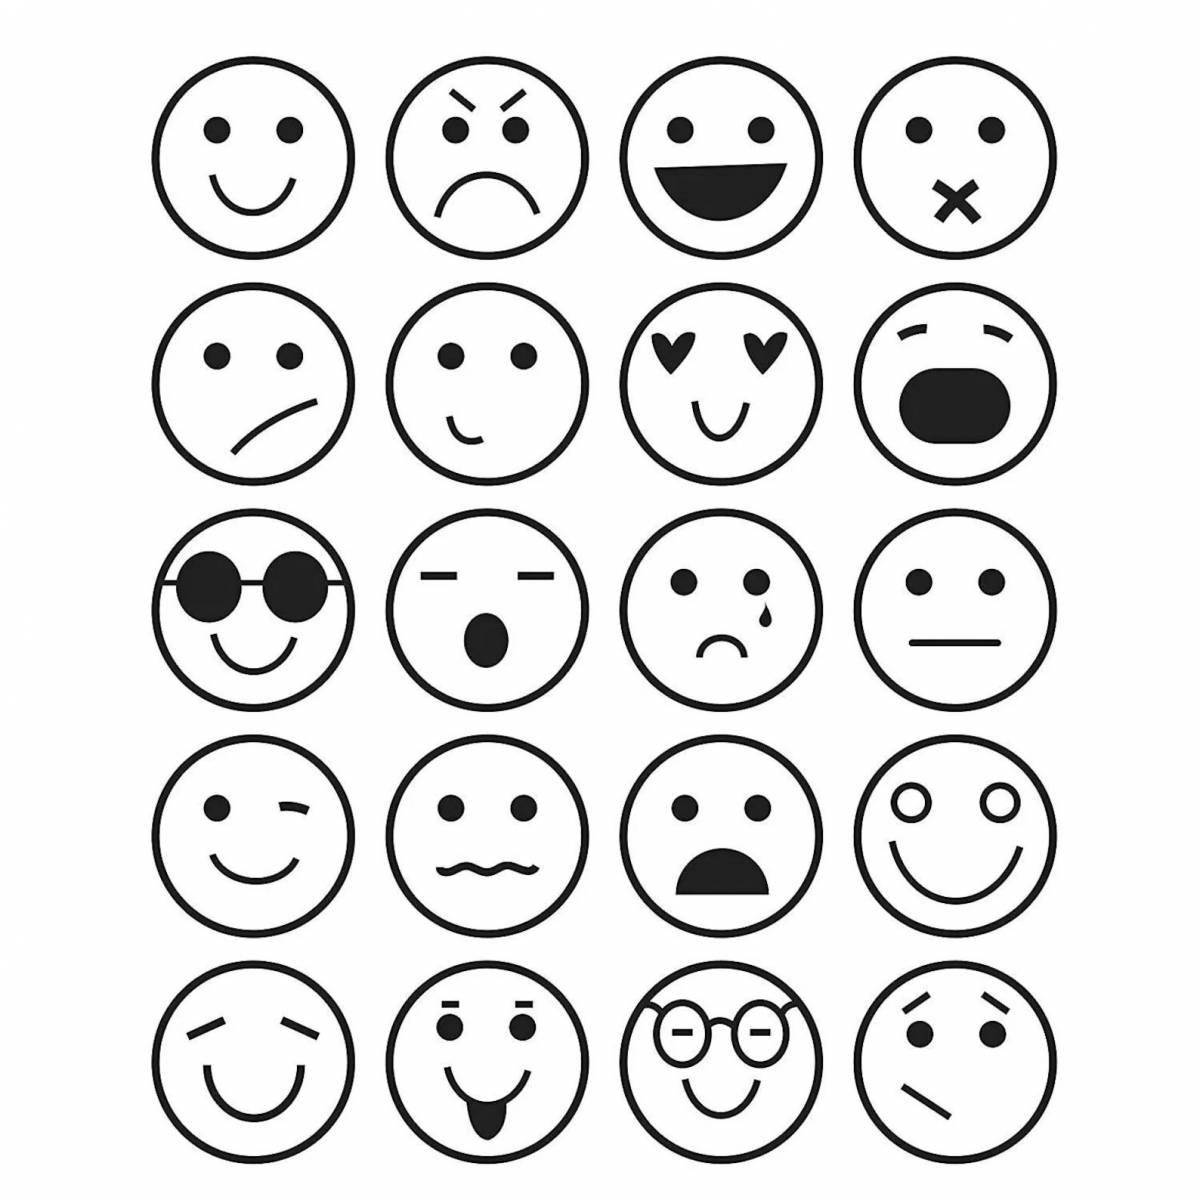 Anxious emoji coloring page